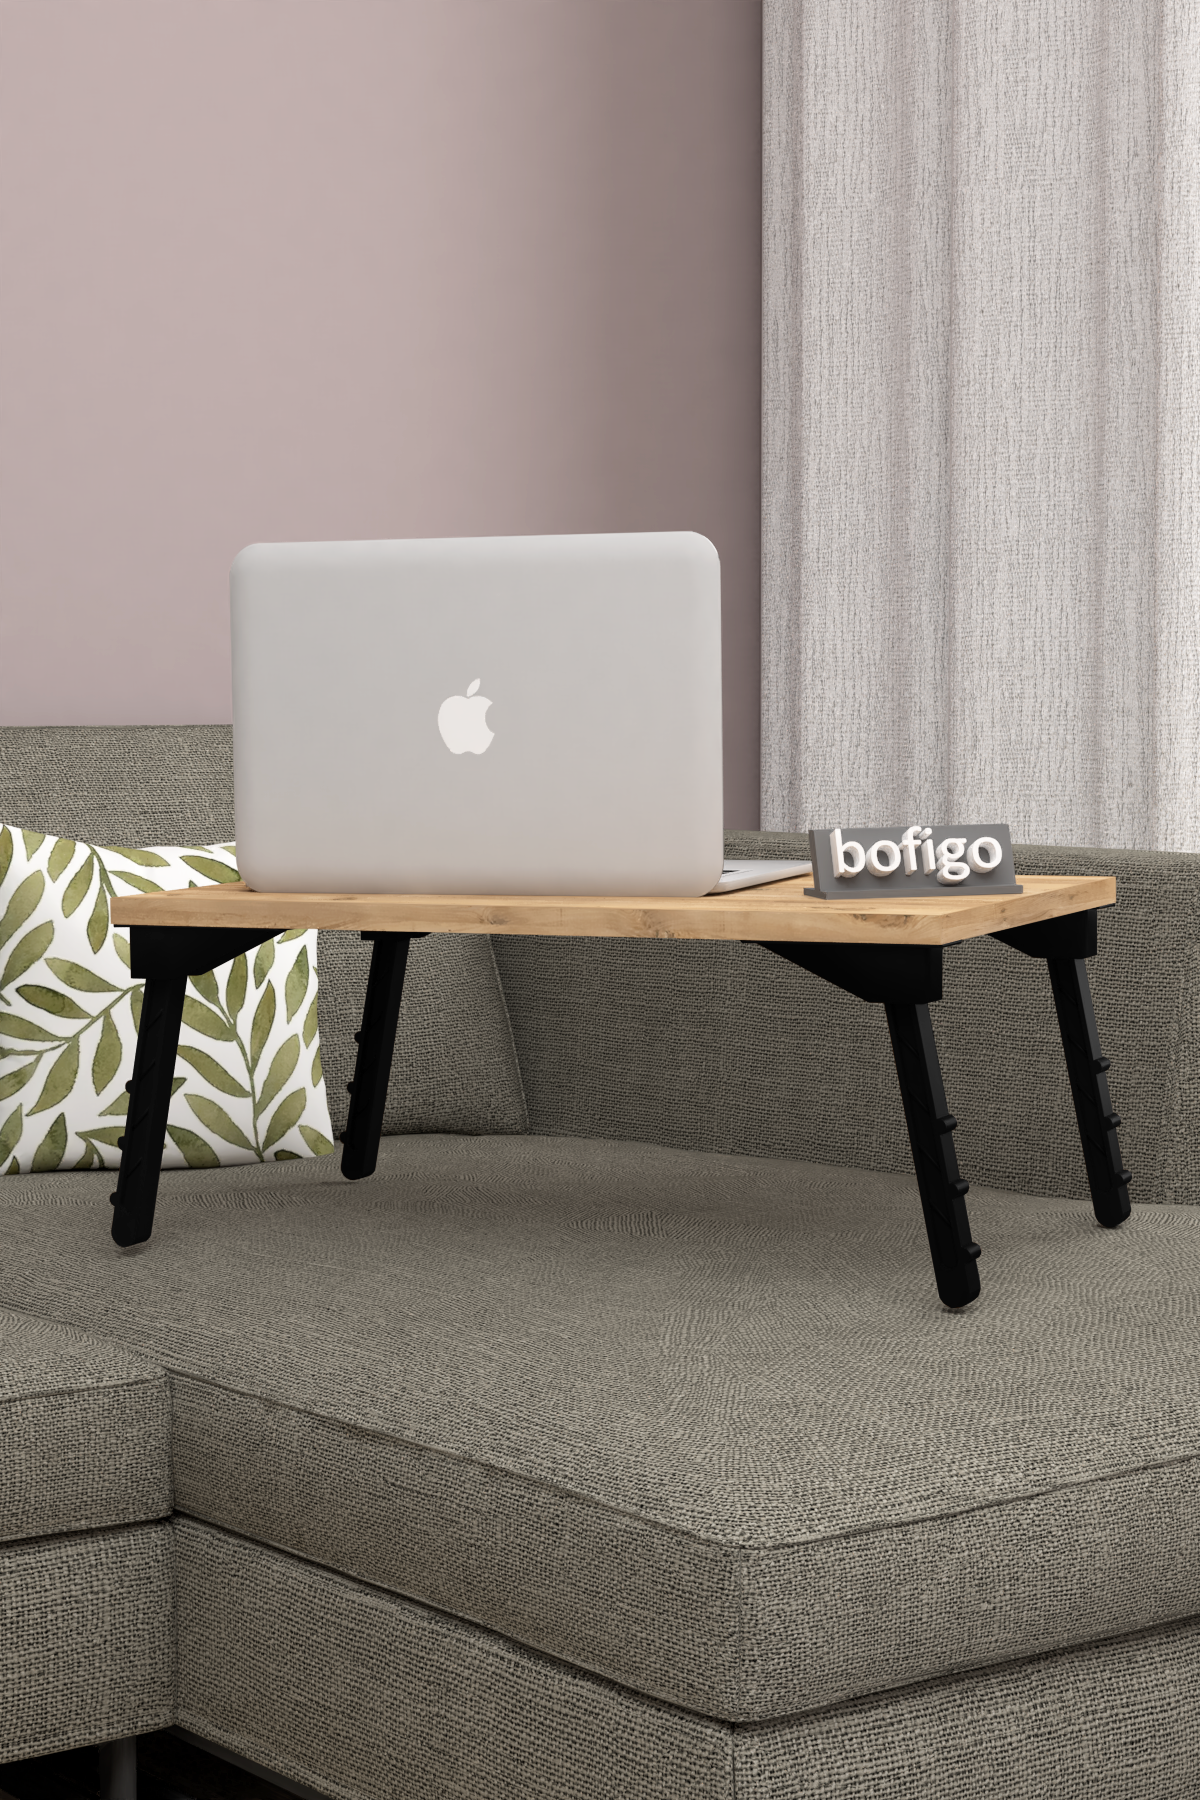 Bofigo Laptop Table Breakfast Table Study Table Pine